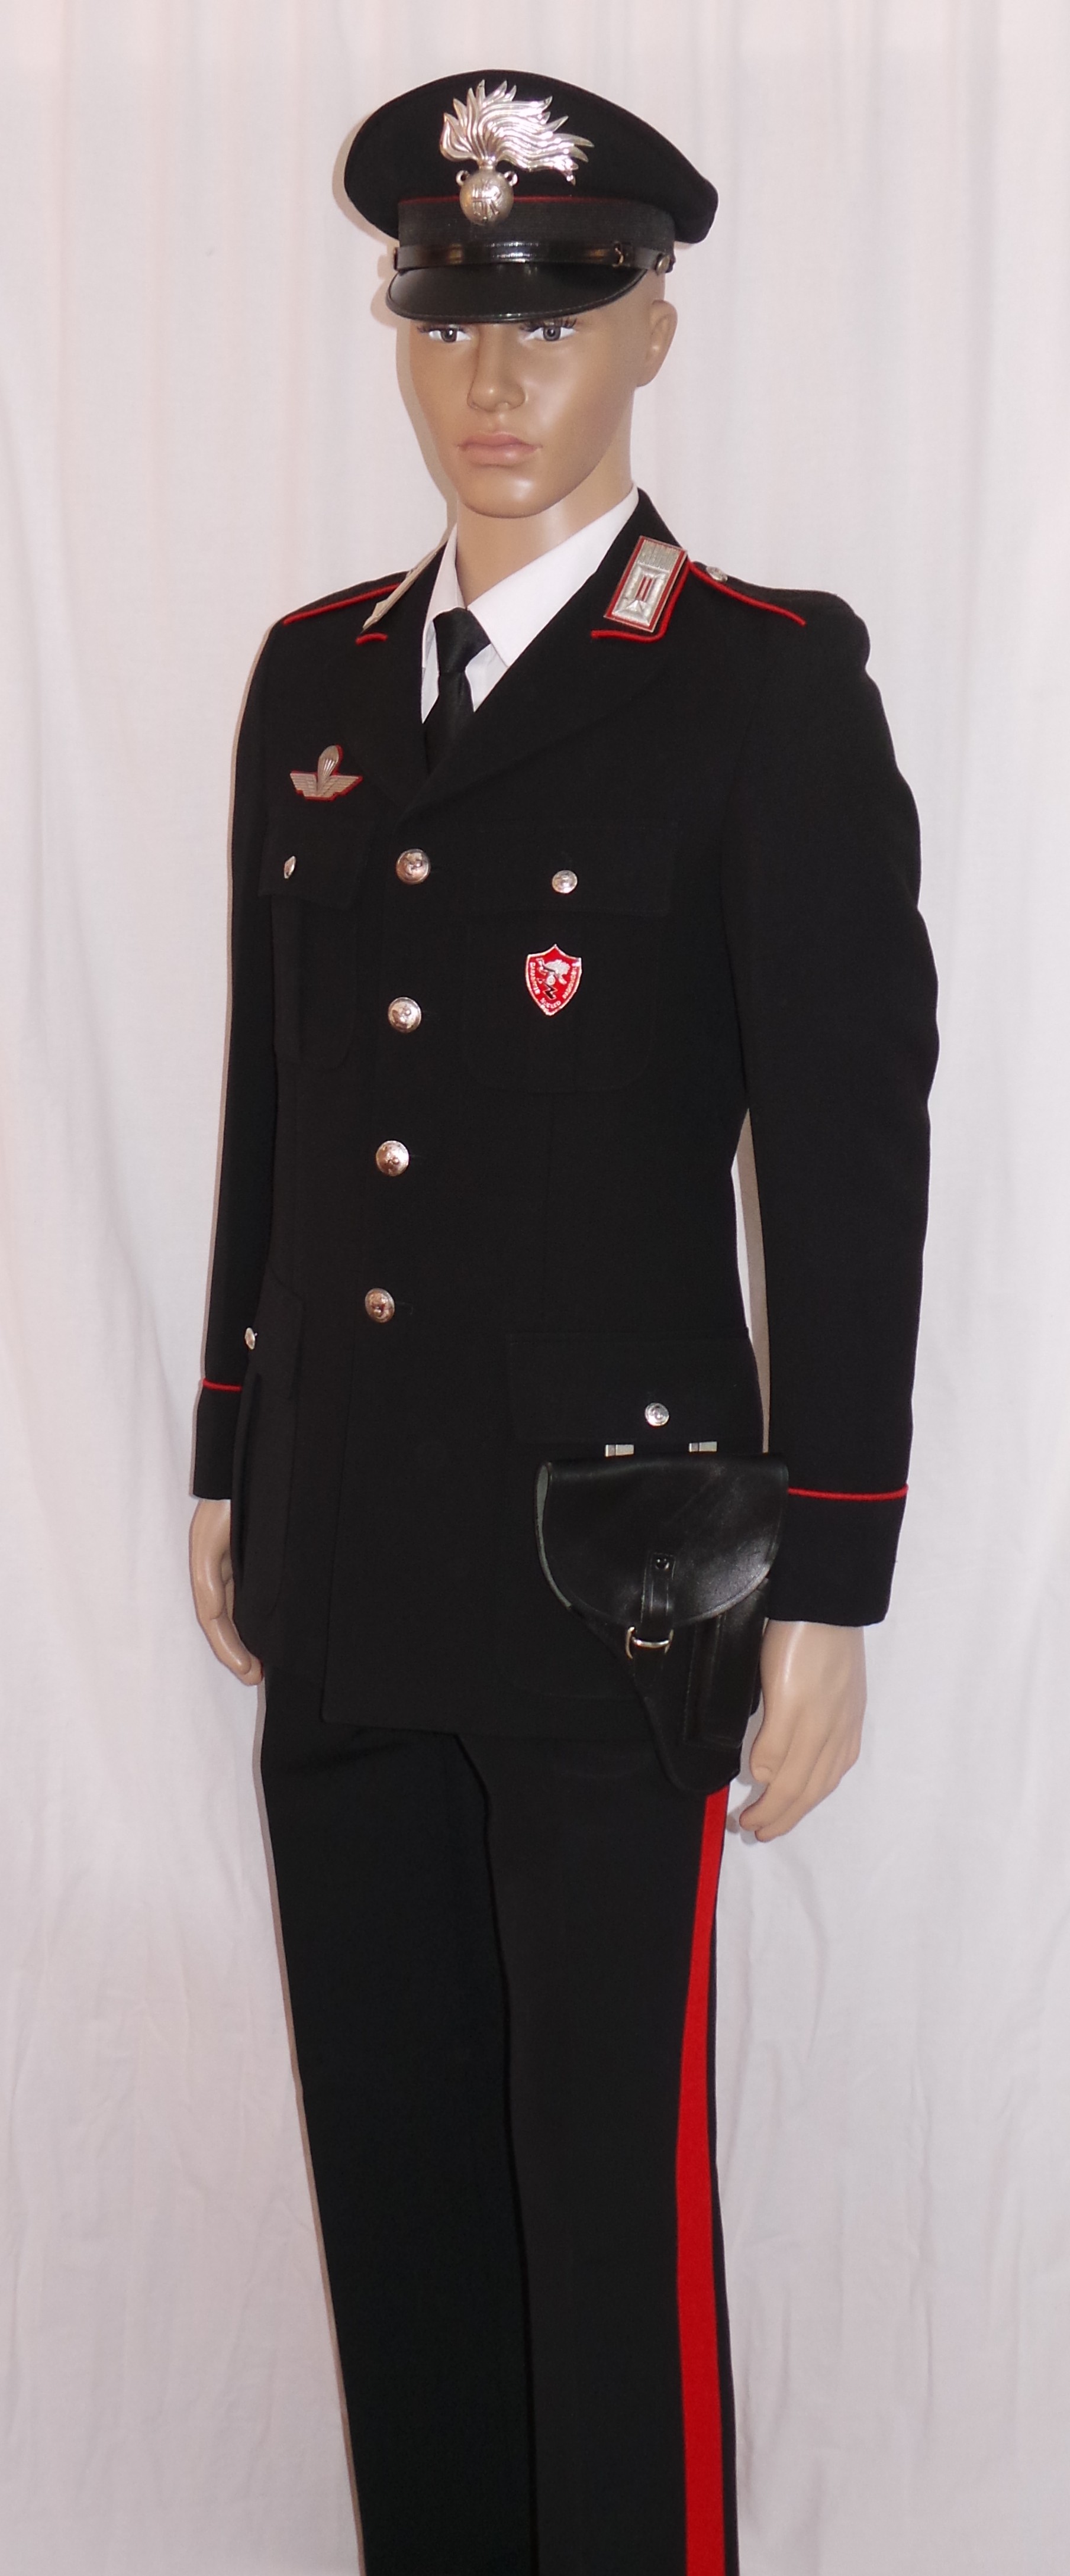 06 Italy Carabinieri Service Dress